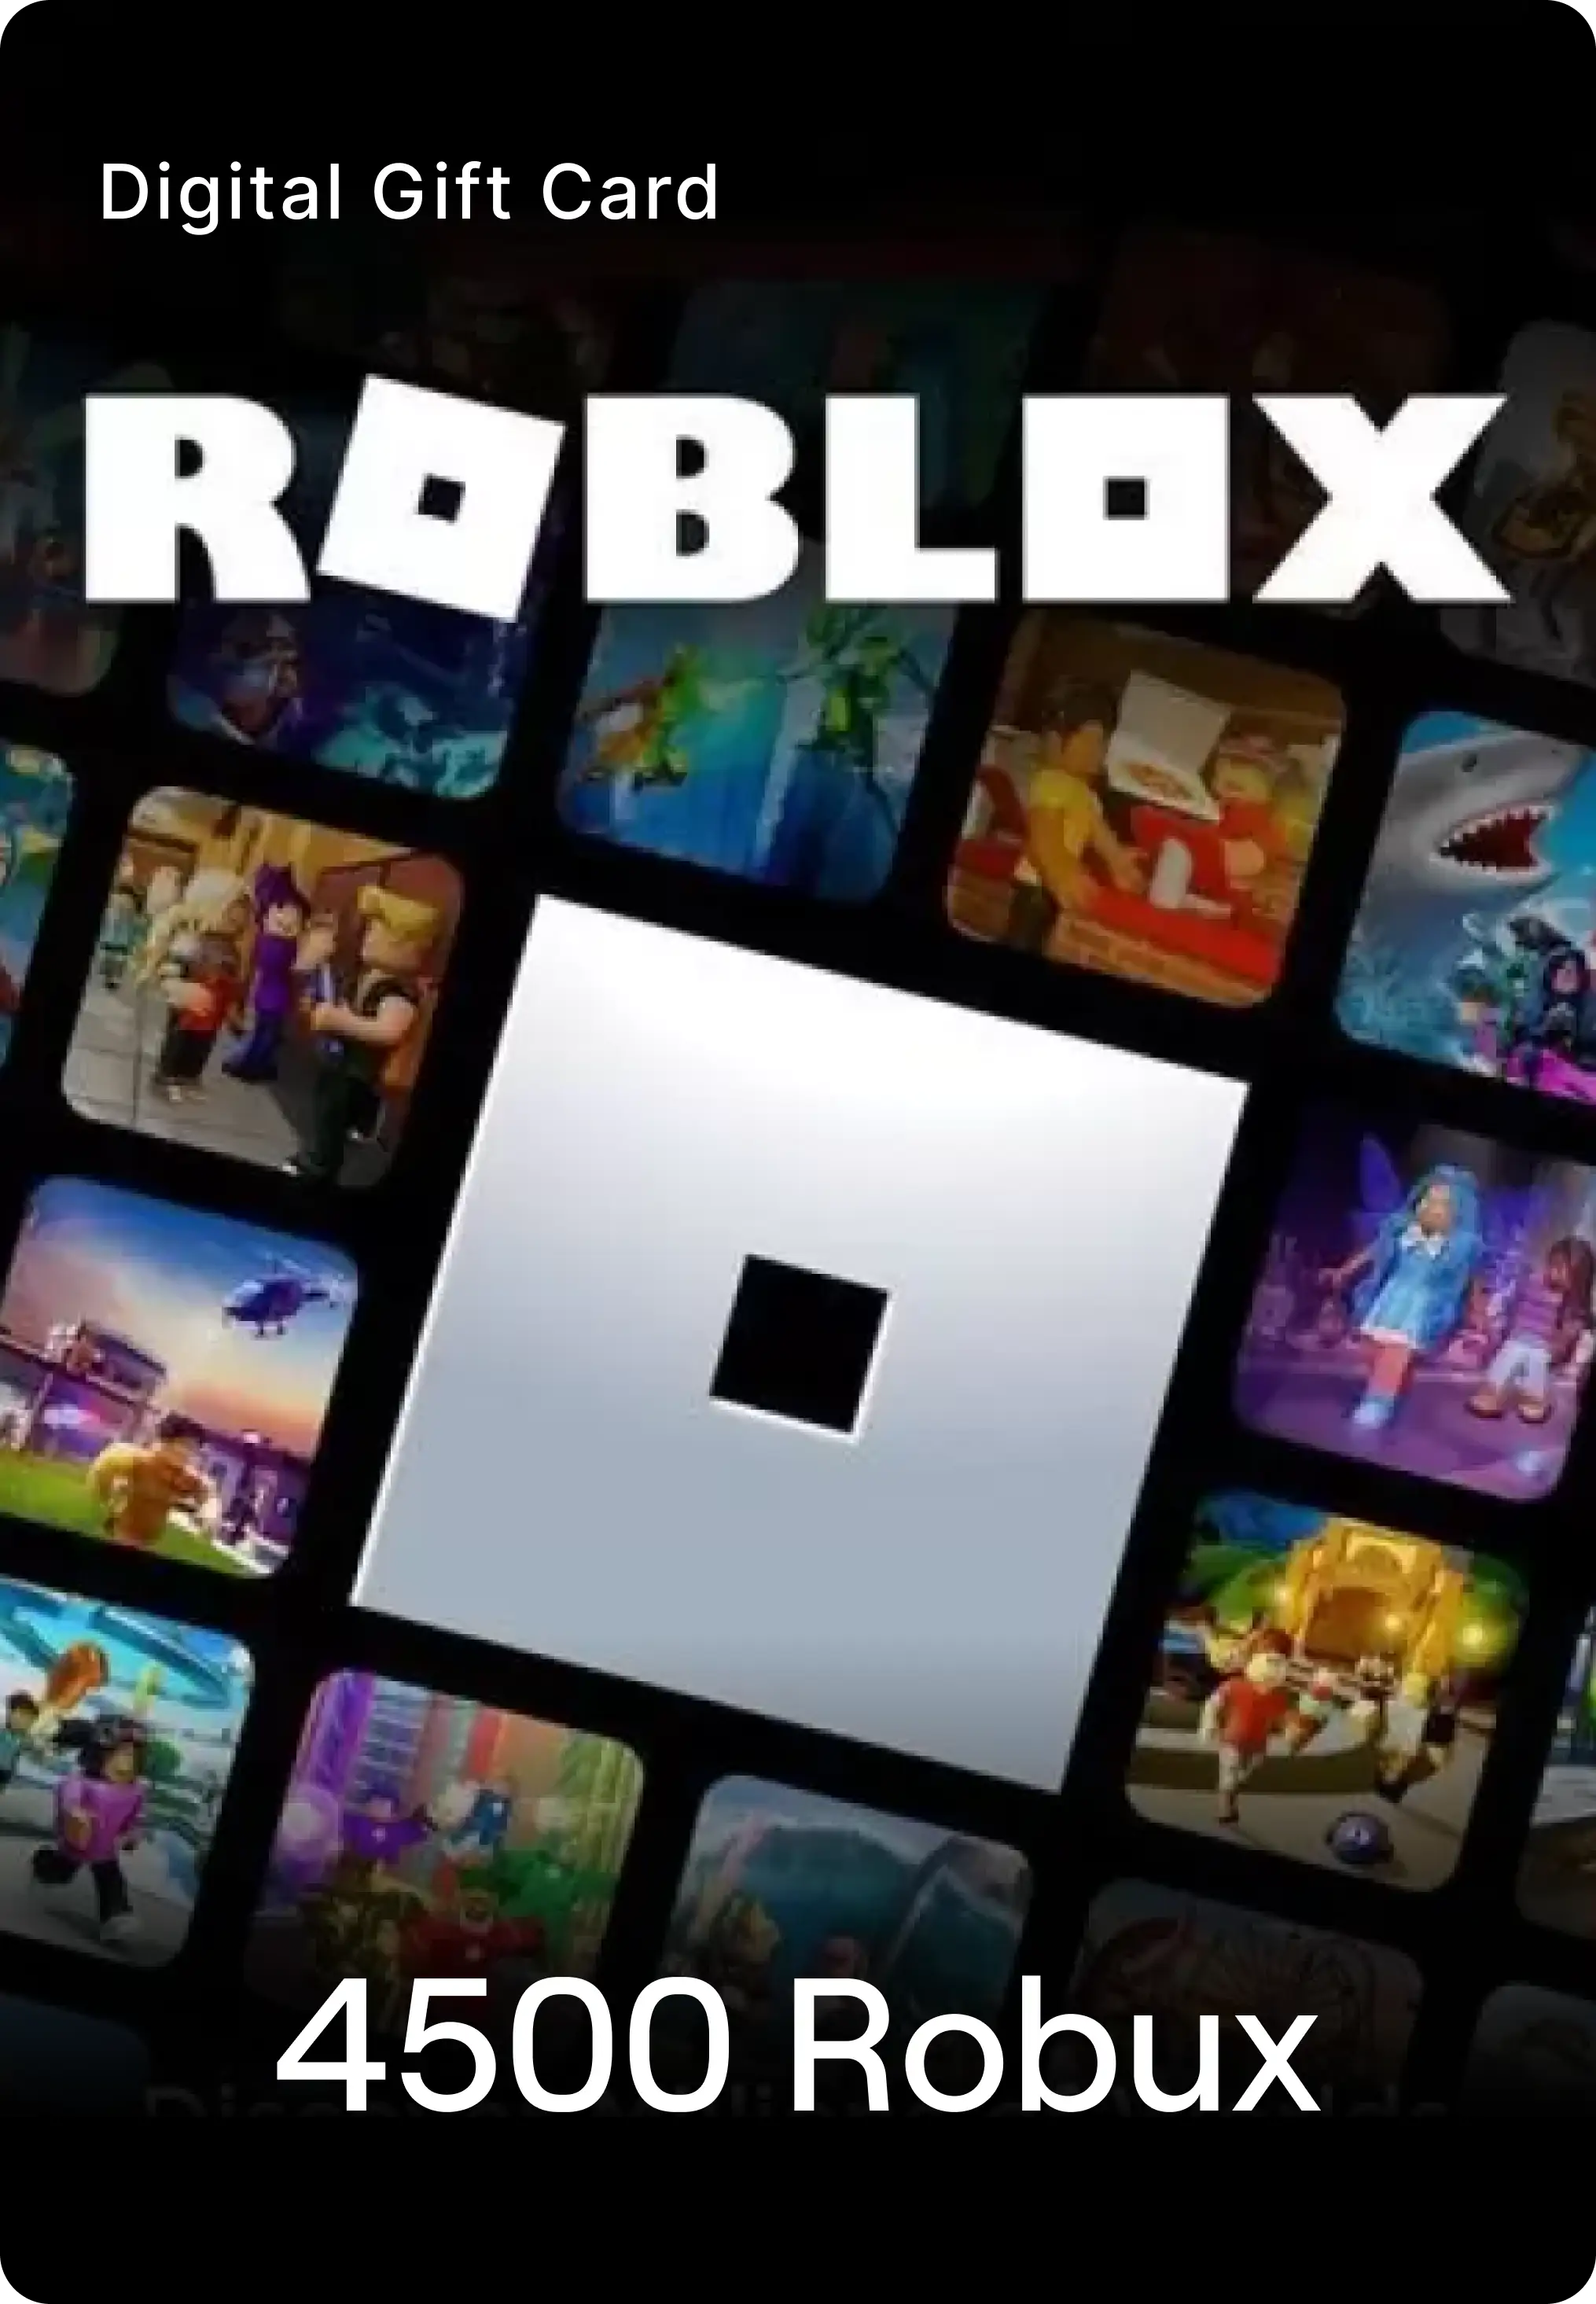 Roblox - 4500 Robux - Digital Code